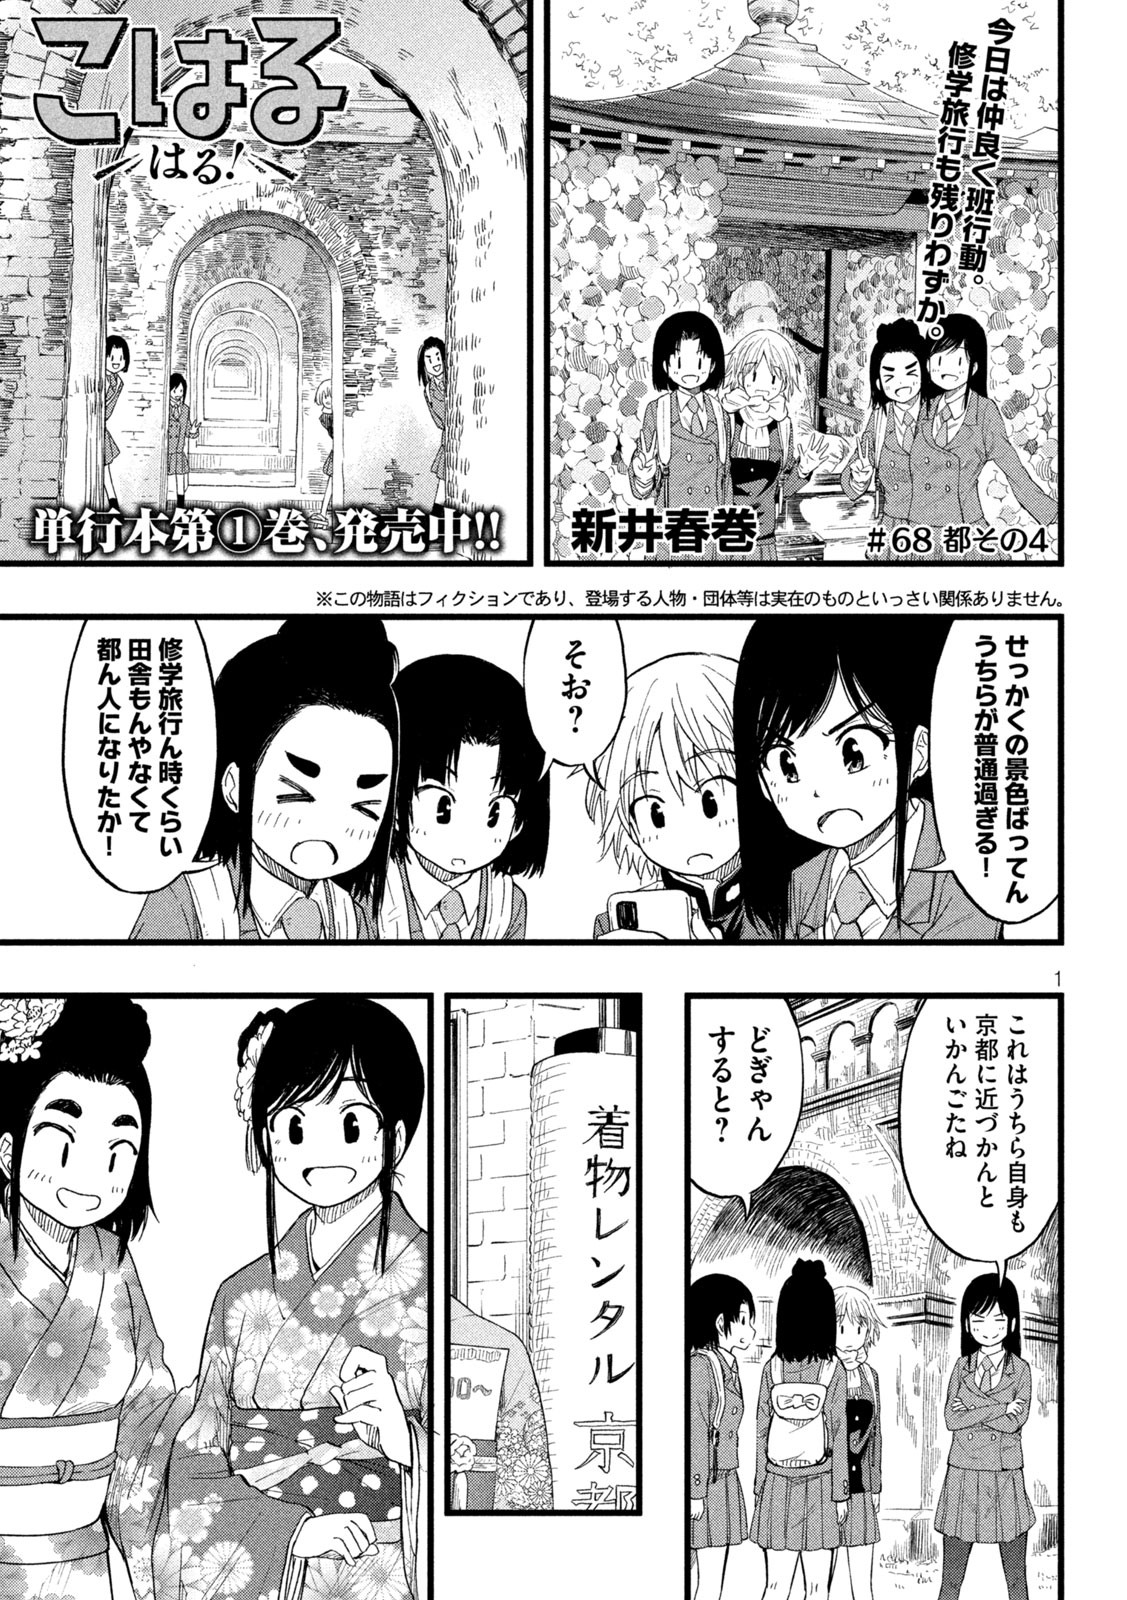 Koharu haru! - Chapter 68 - Page 1